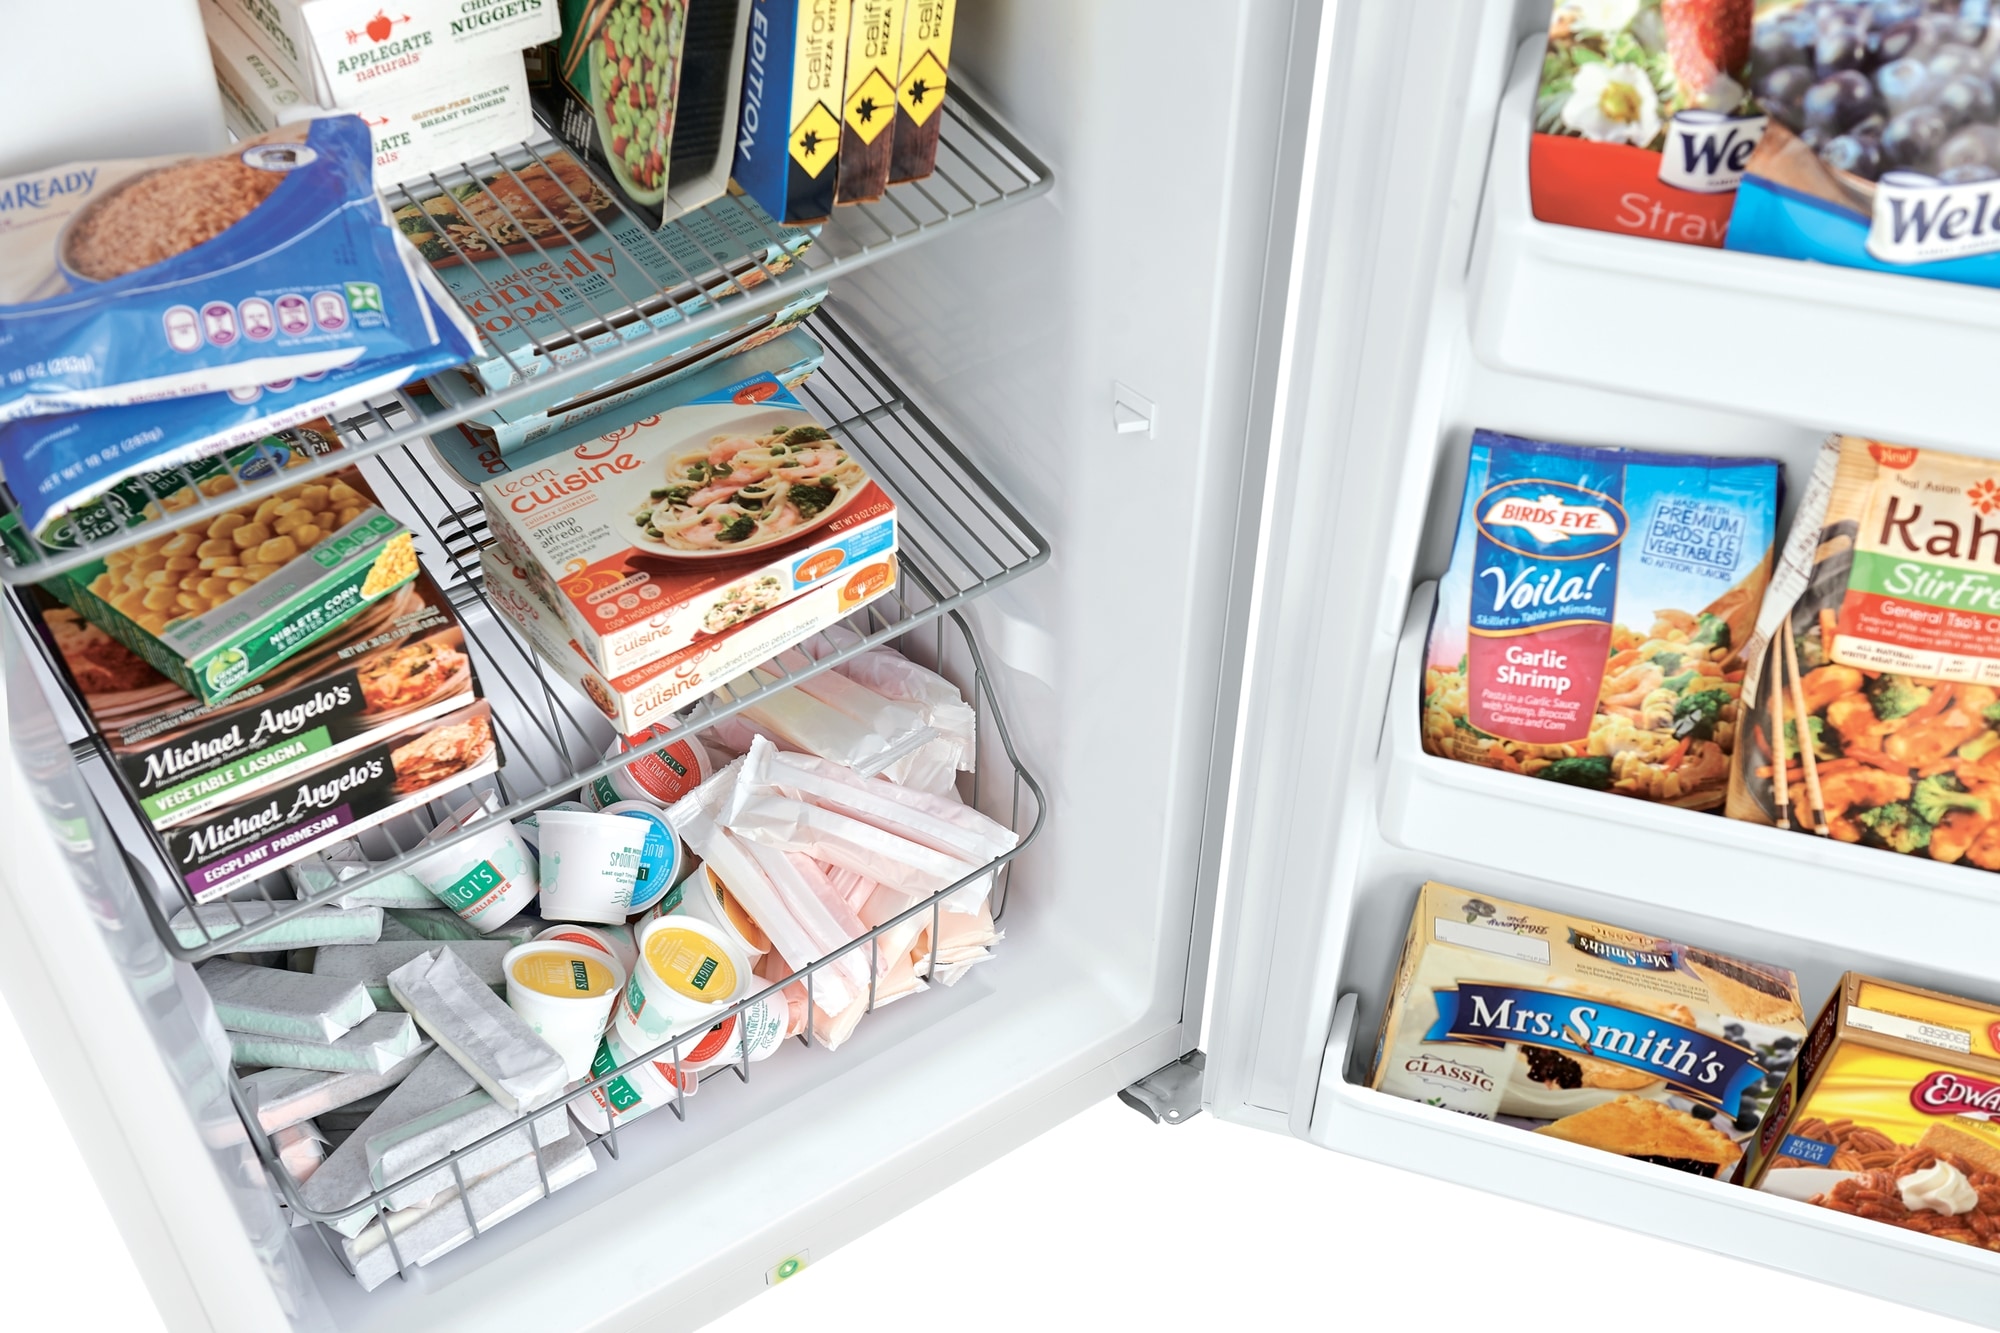 Midea Garage Ready 21-cu ft Frost-free Convertible Upright Freezer/ Refrigerator (White)